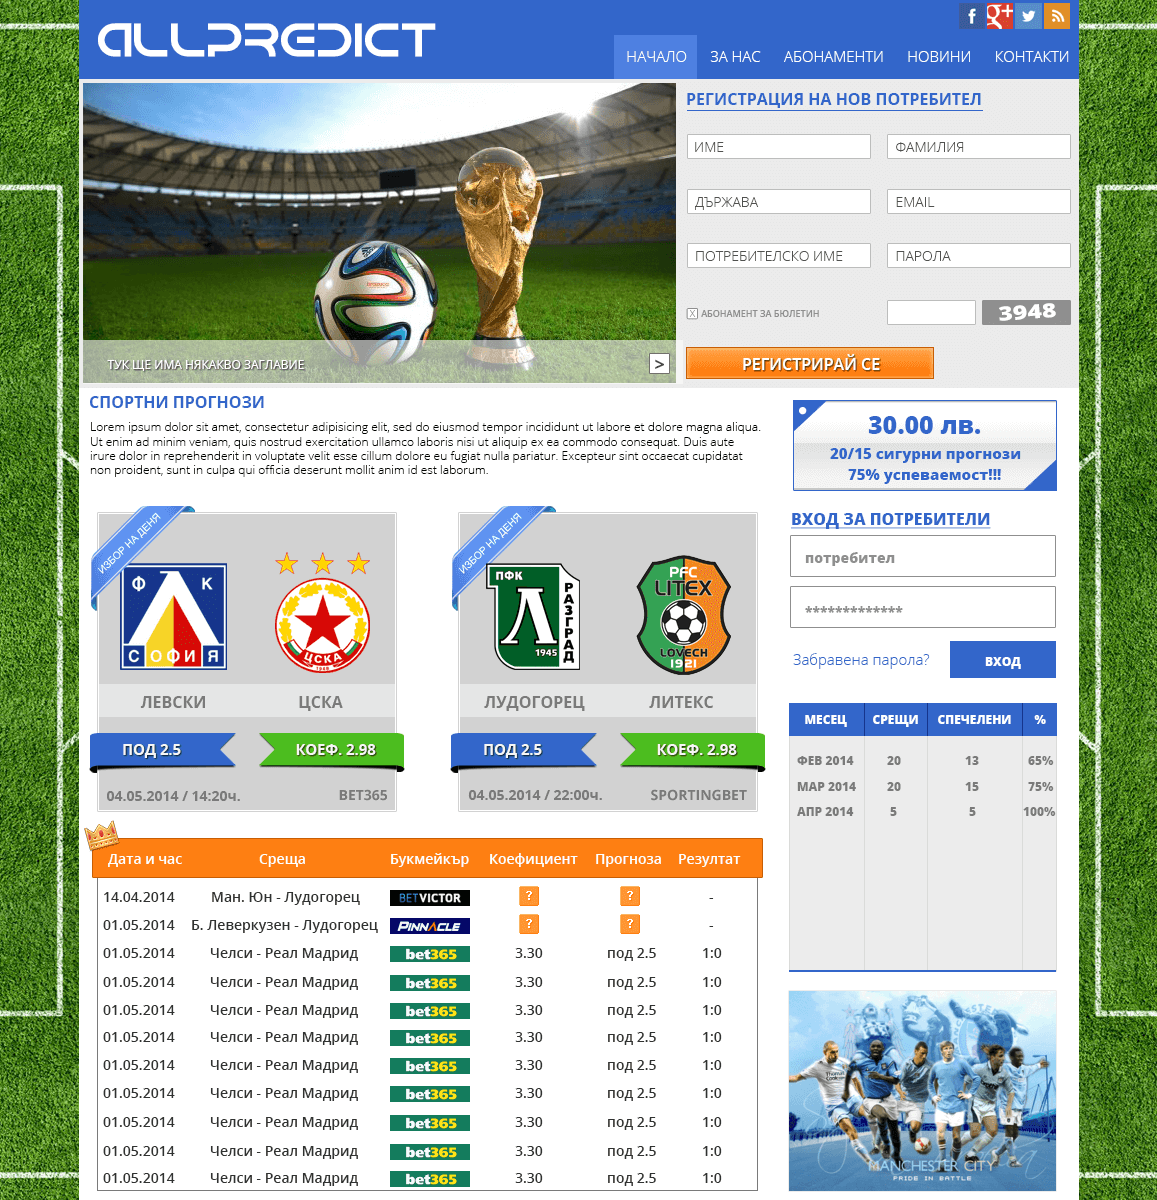 Website of Allpredict - sports predictions